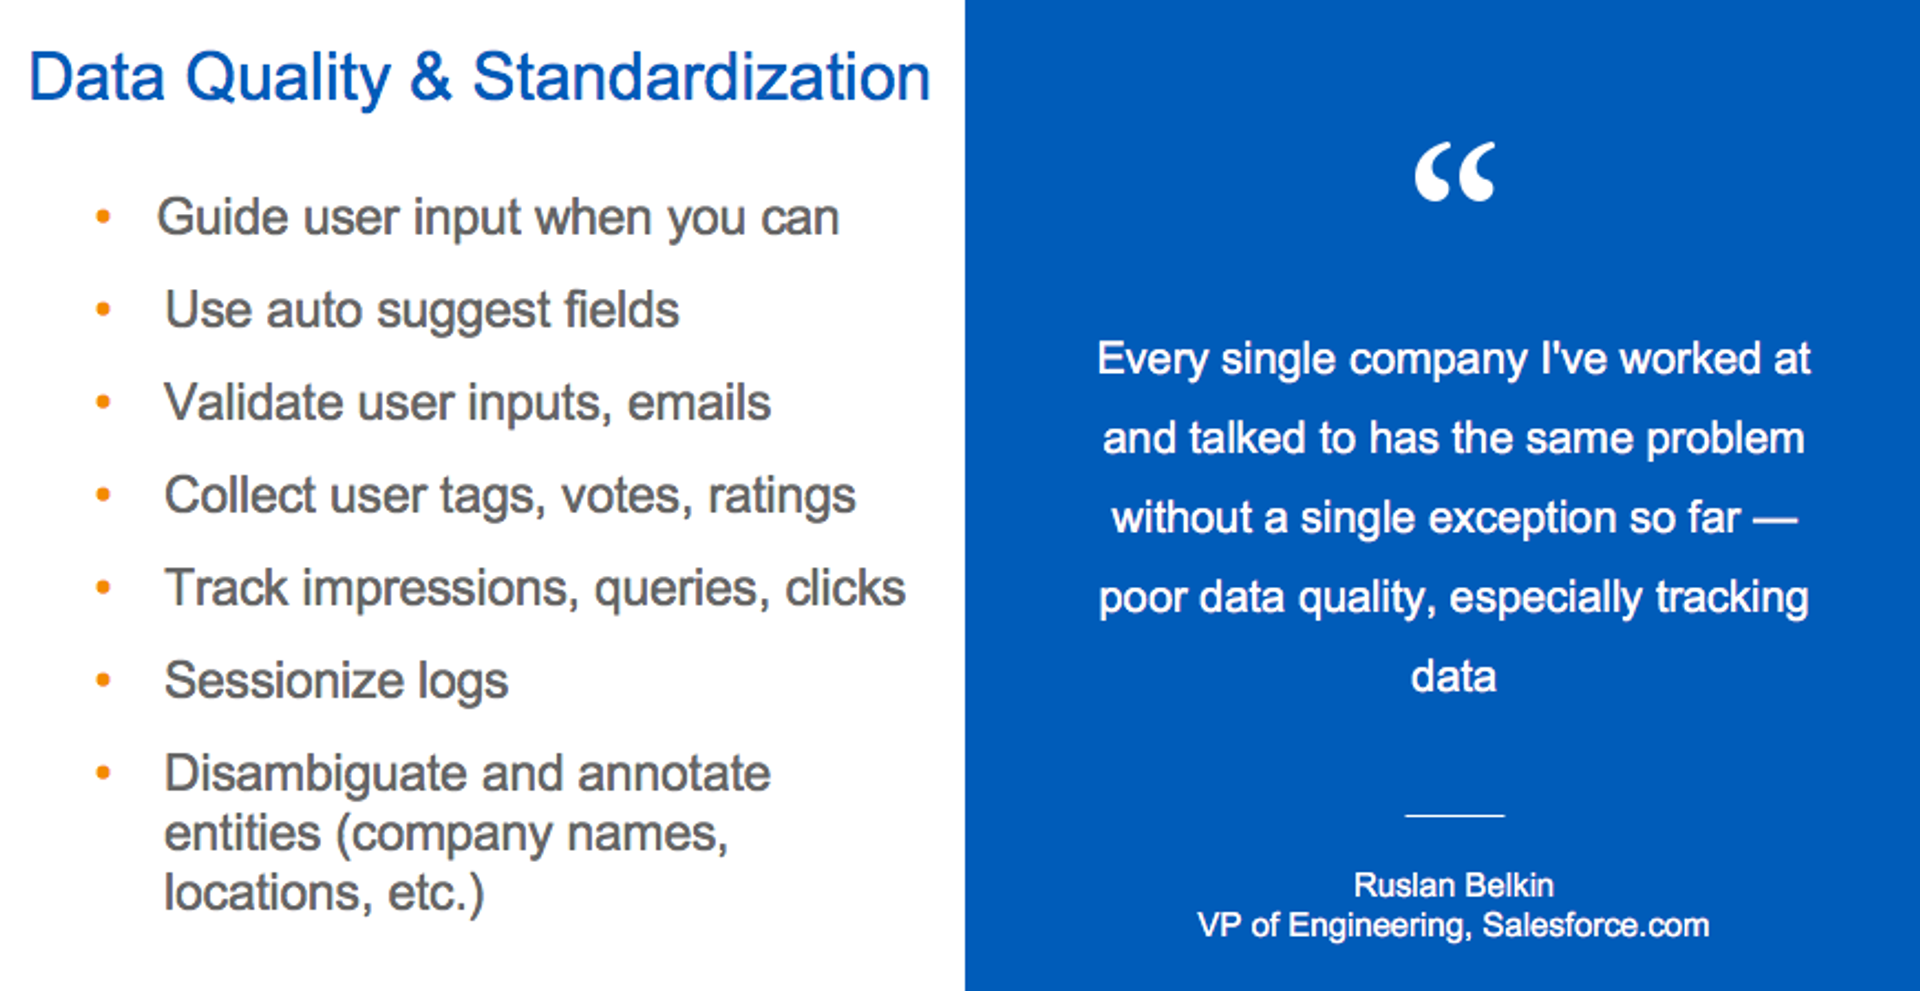 Data Quality & Standardization